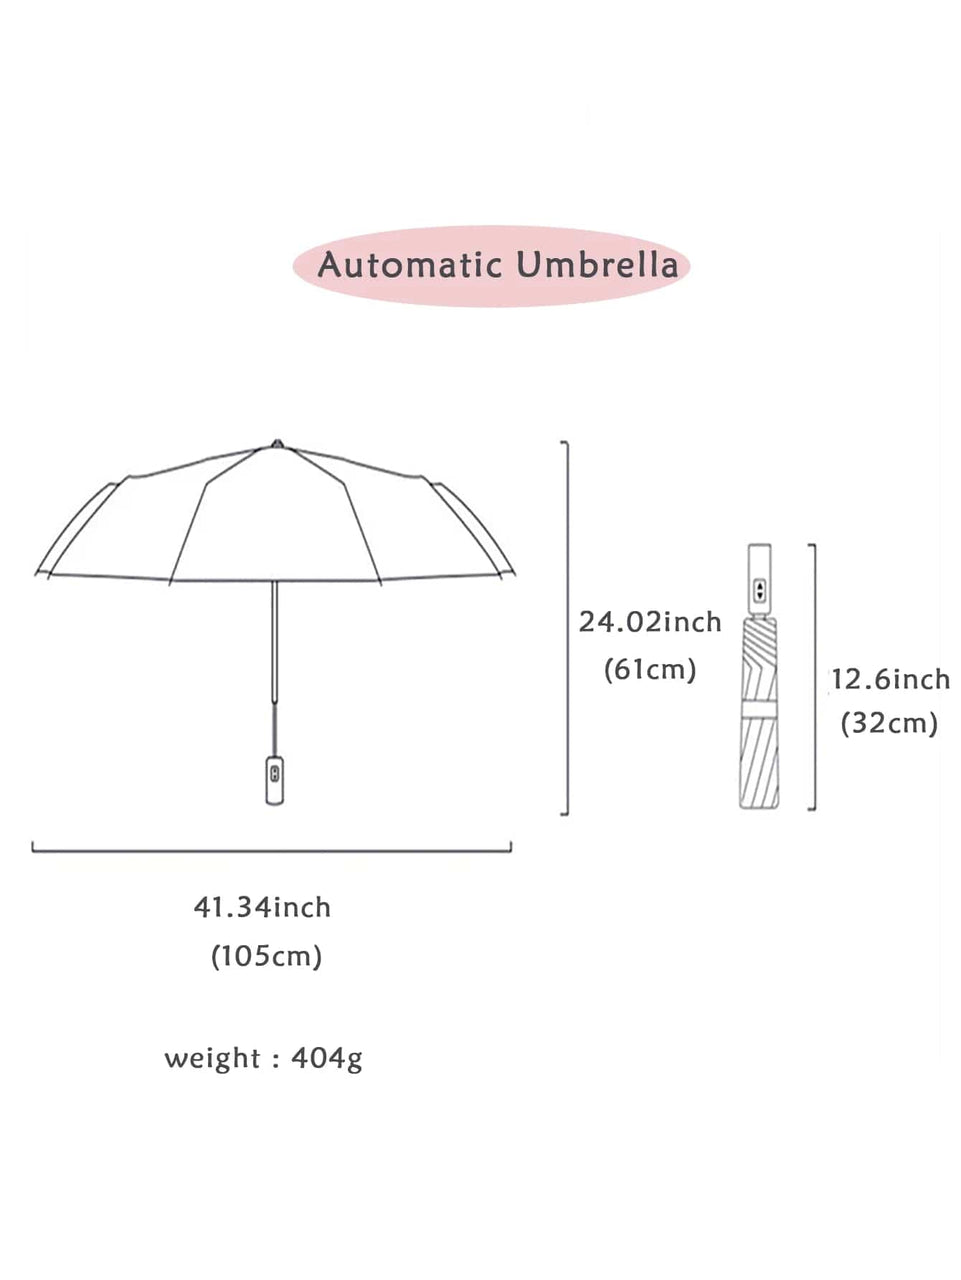 Umbrella Windproof Double Layer Fully Automatic Resistant Umbrella